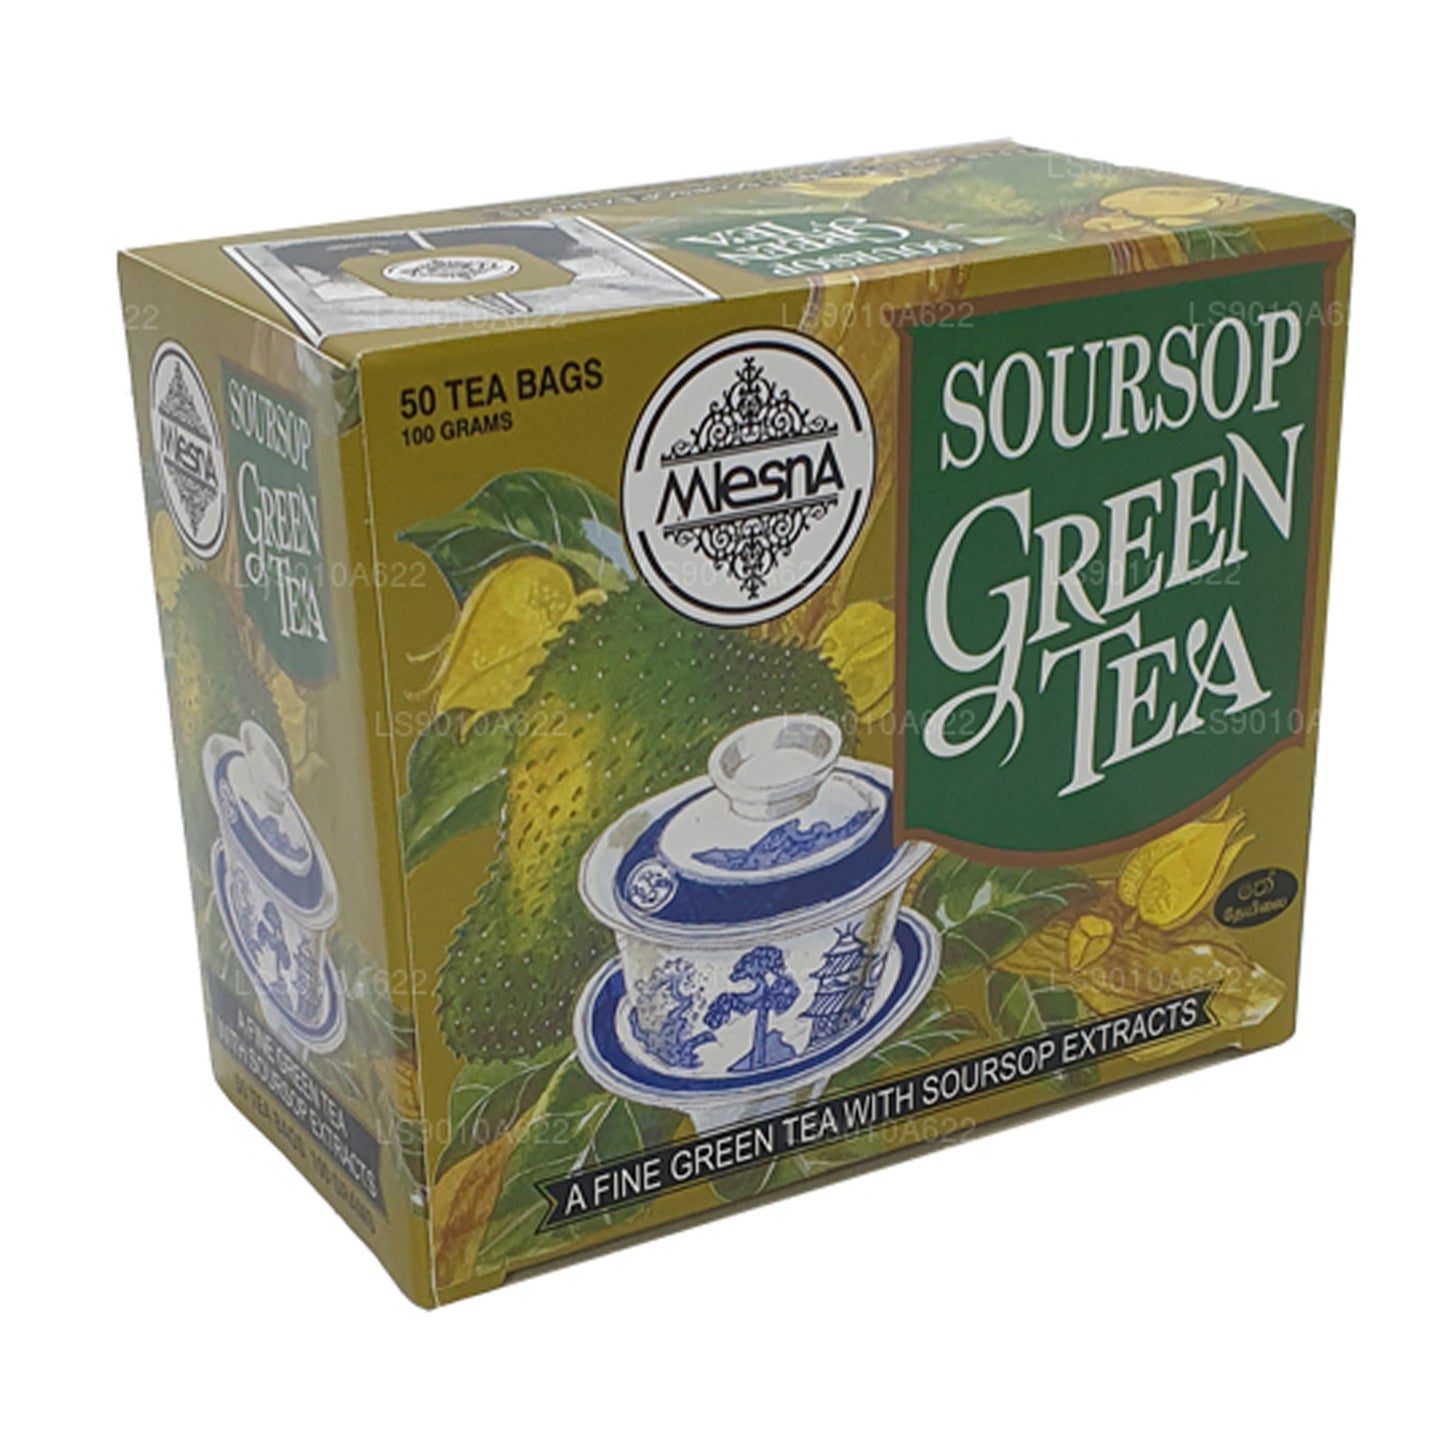 Mlesna Soursop Green Tea (100g) 50 Tea Bags